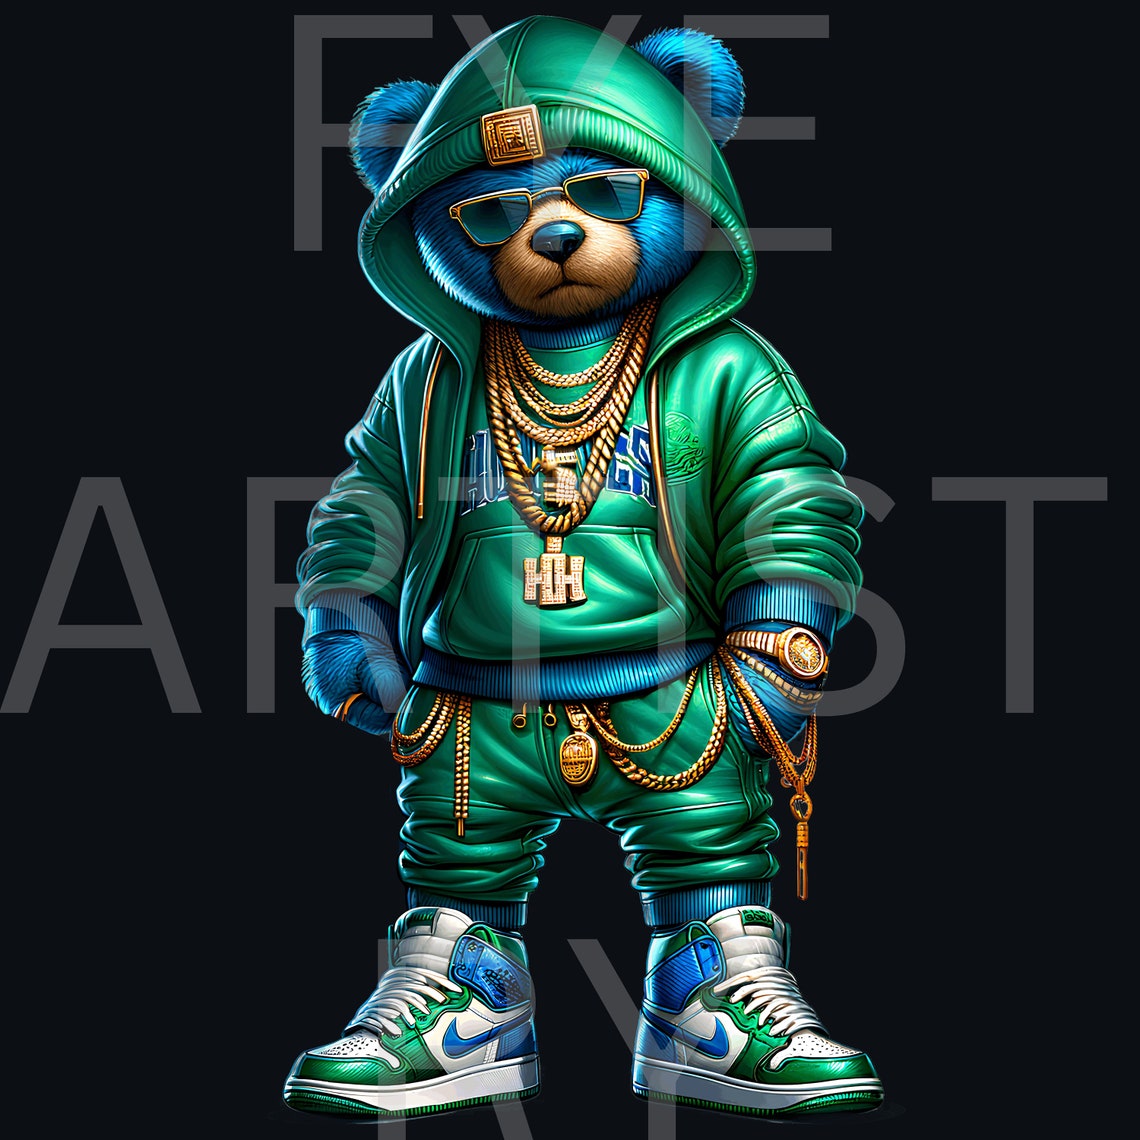 Green and Royal Blue Teddy Bear PNG , Graffiti, Hip Hop Digital ...